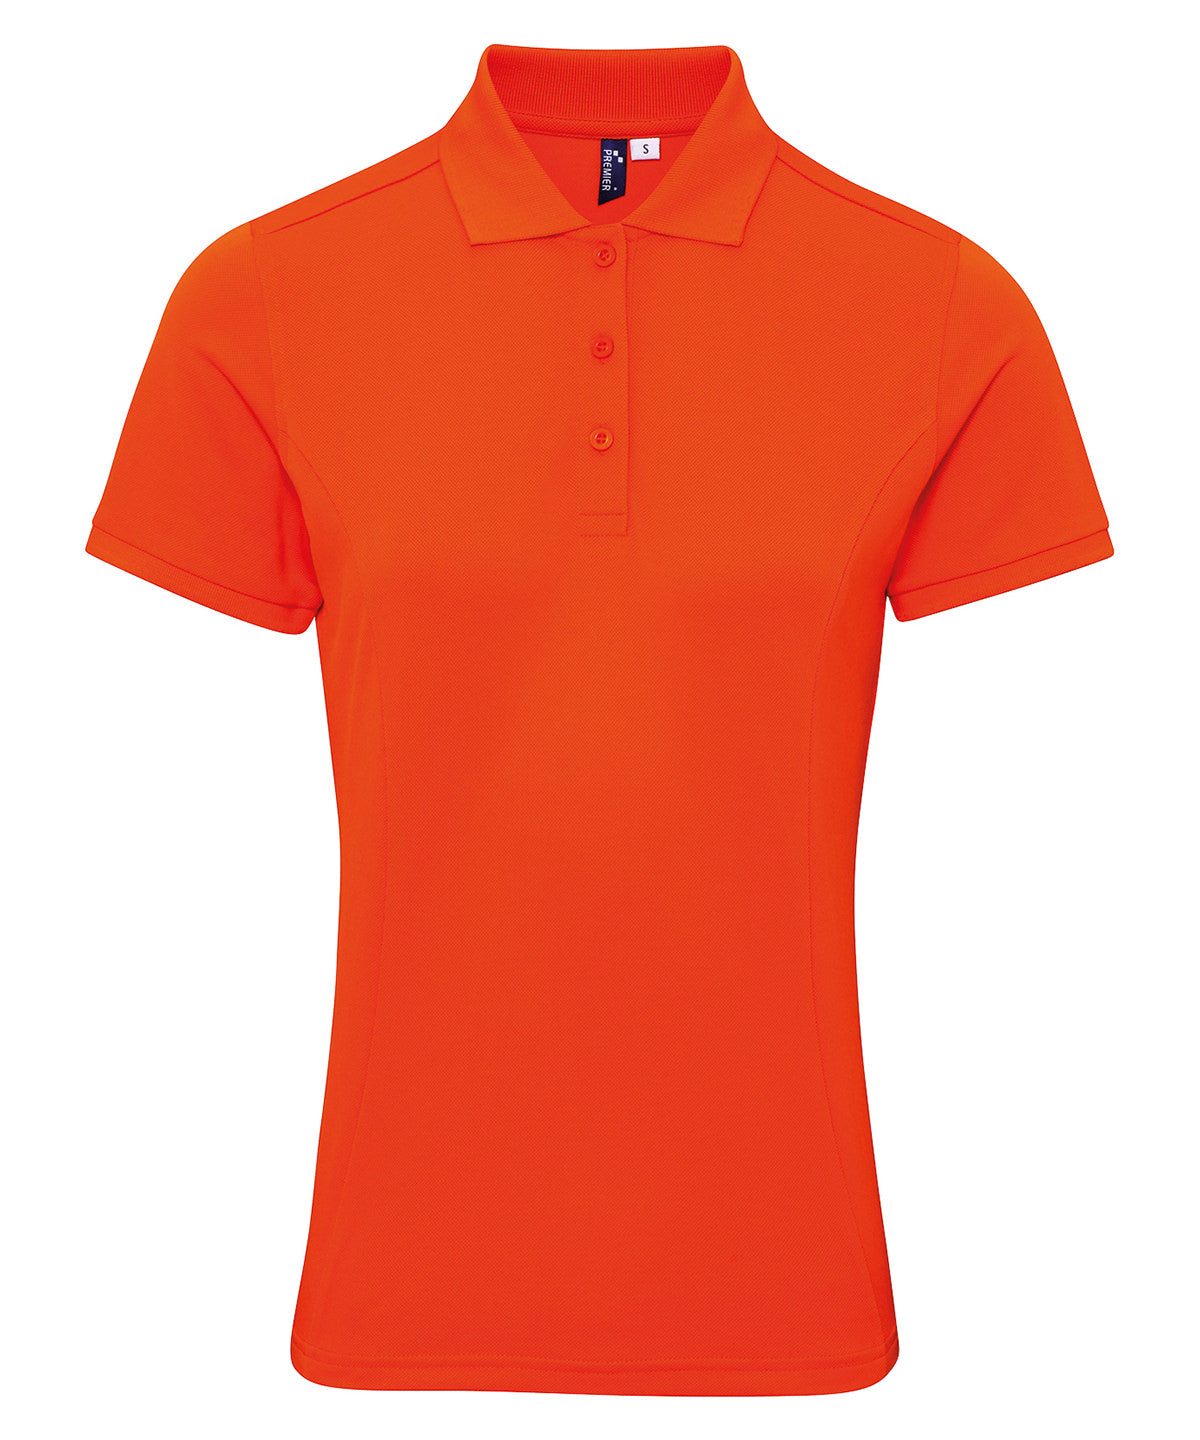 Personalised Polo Shirts - Black Premier Women's Coolchecker® plus piqué polo